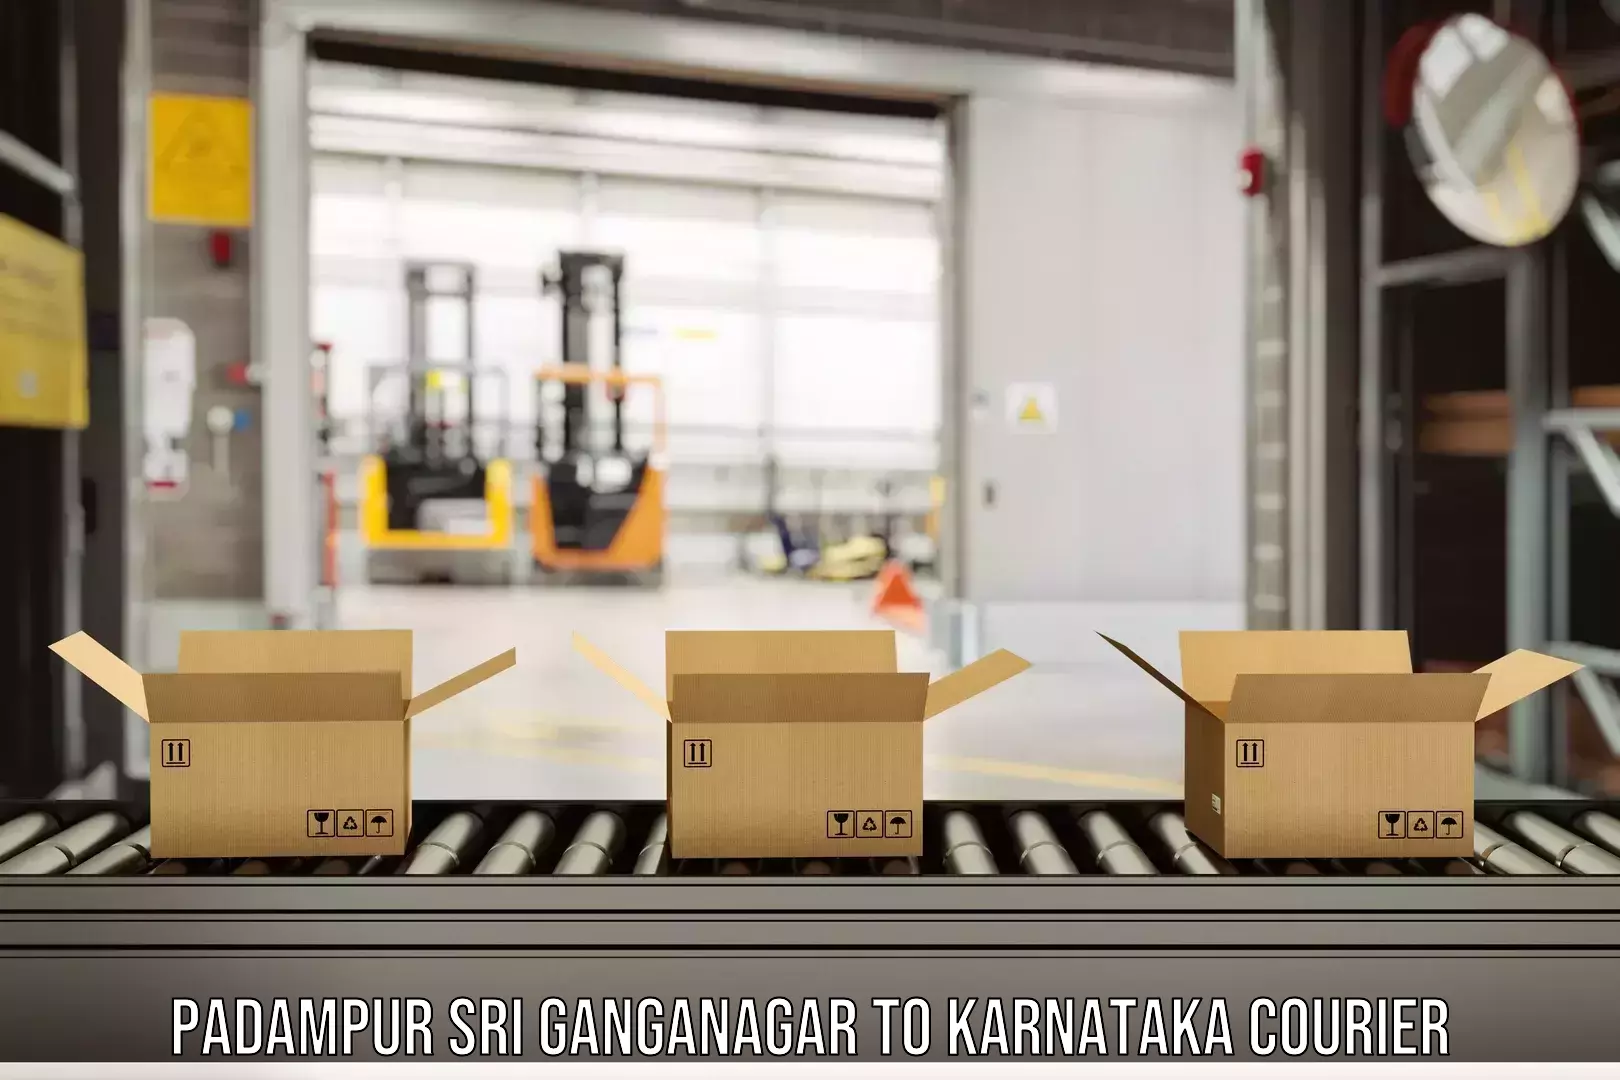 Multi-service courier options Padampur Sri Ganganagar to Bhatkal